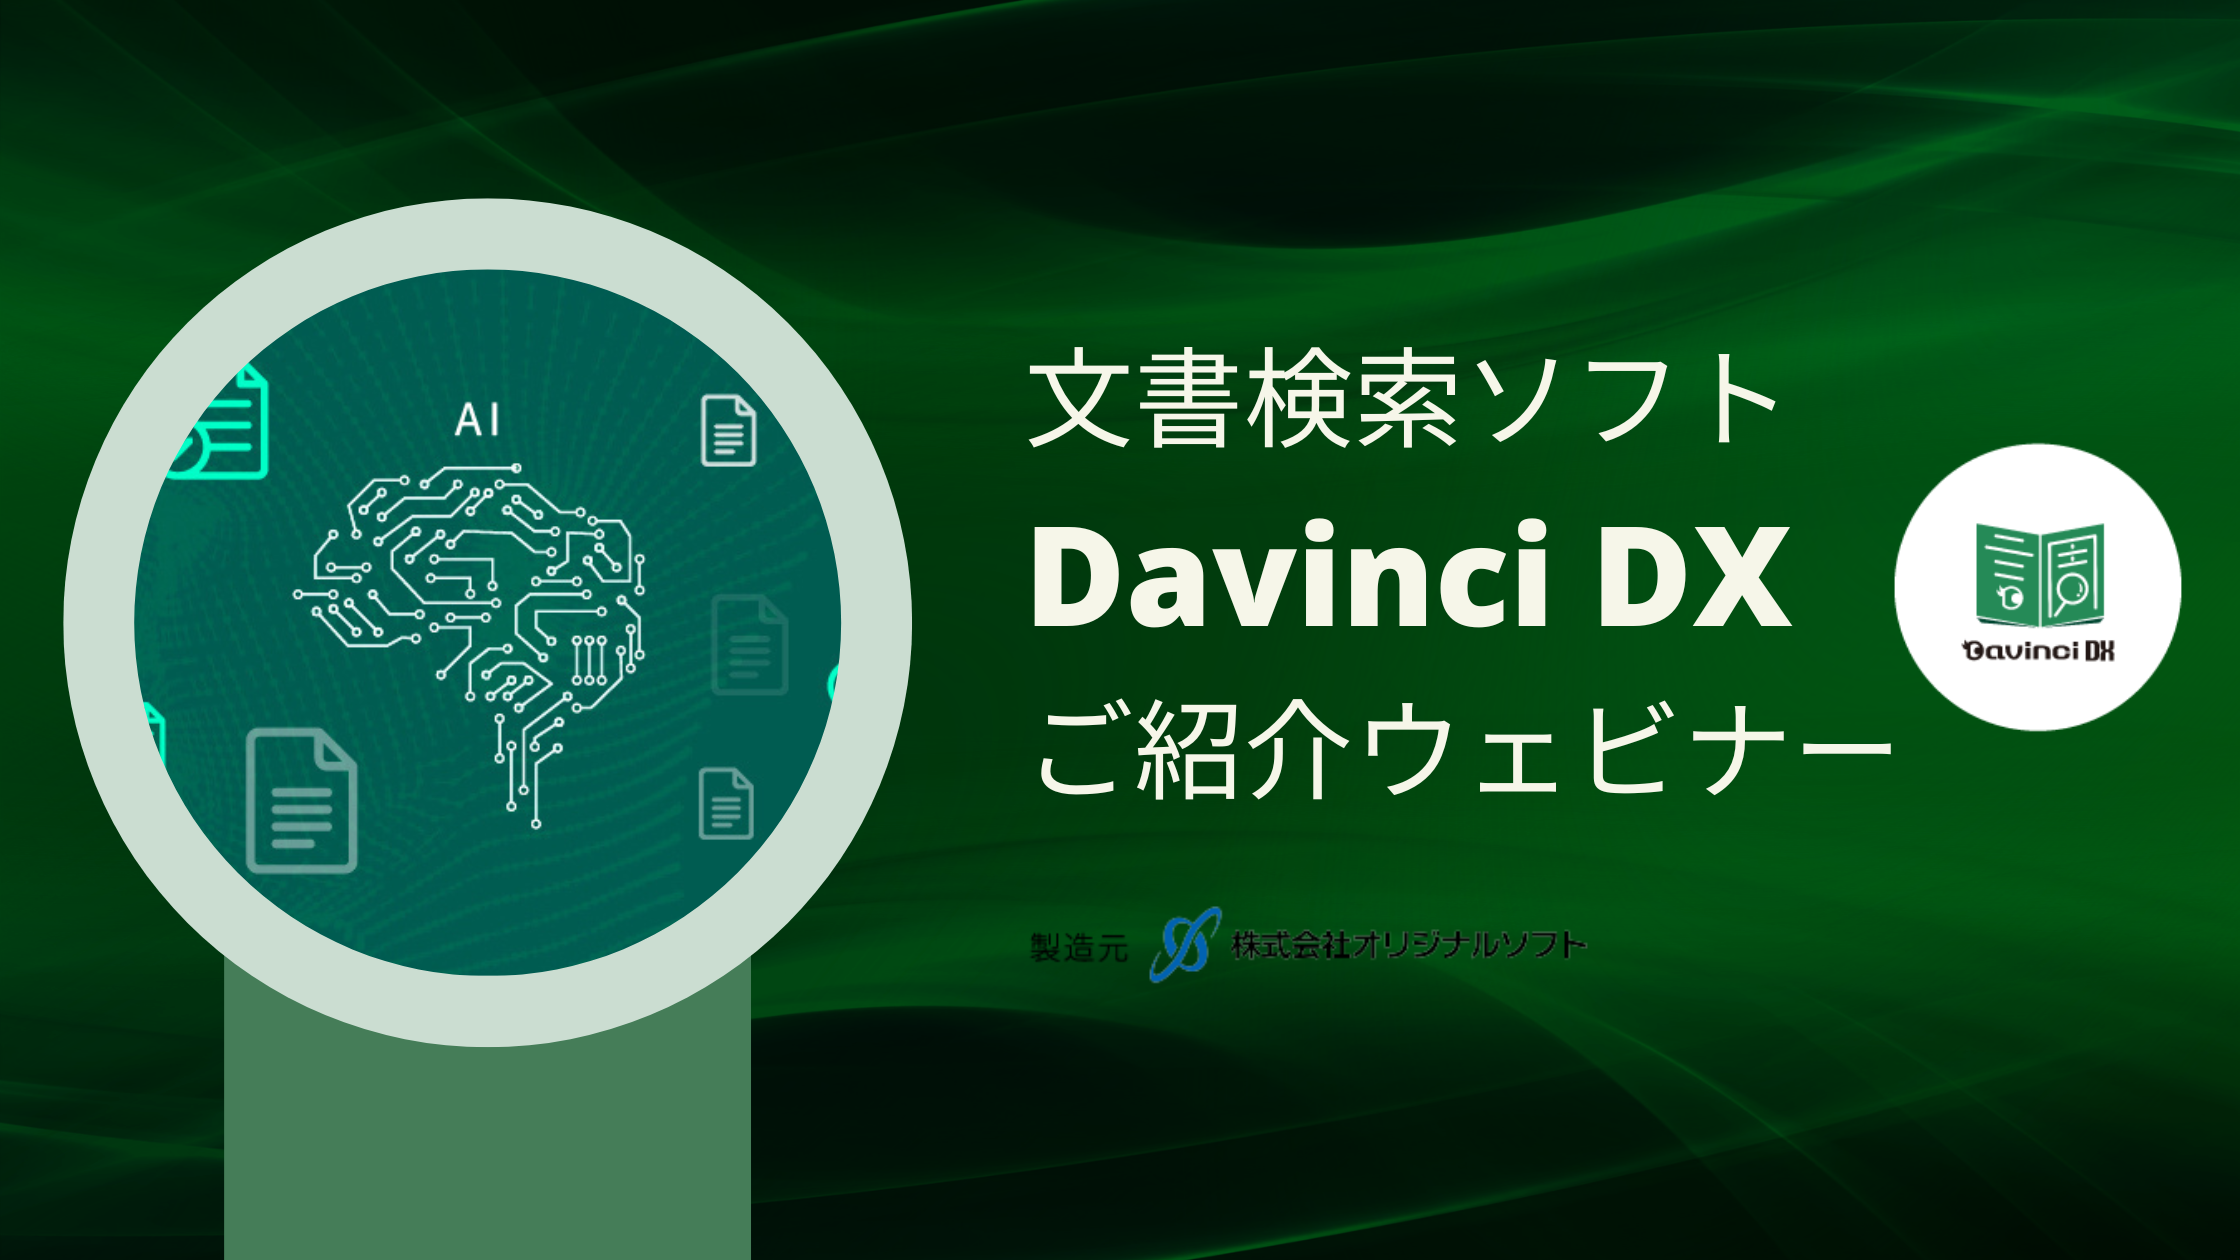 Davinci DXのご紹介ウェビナー